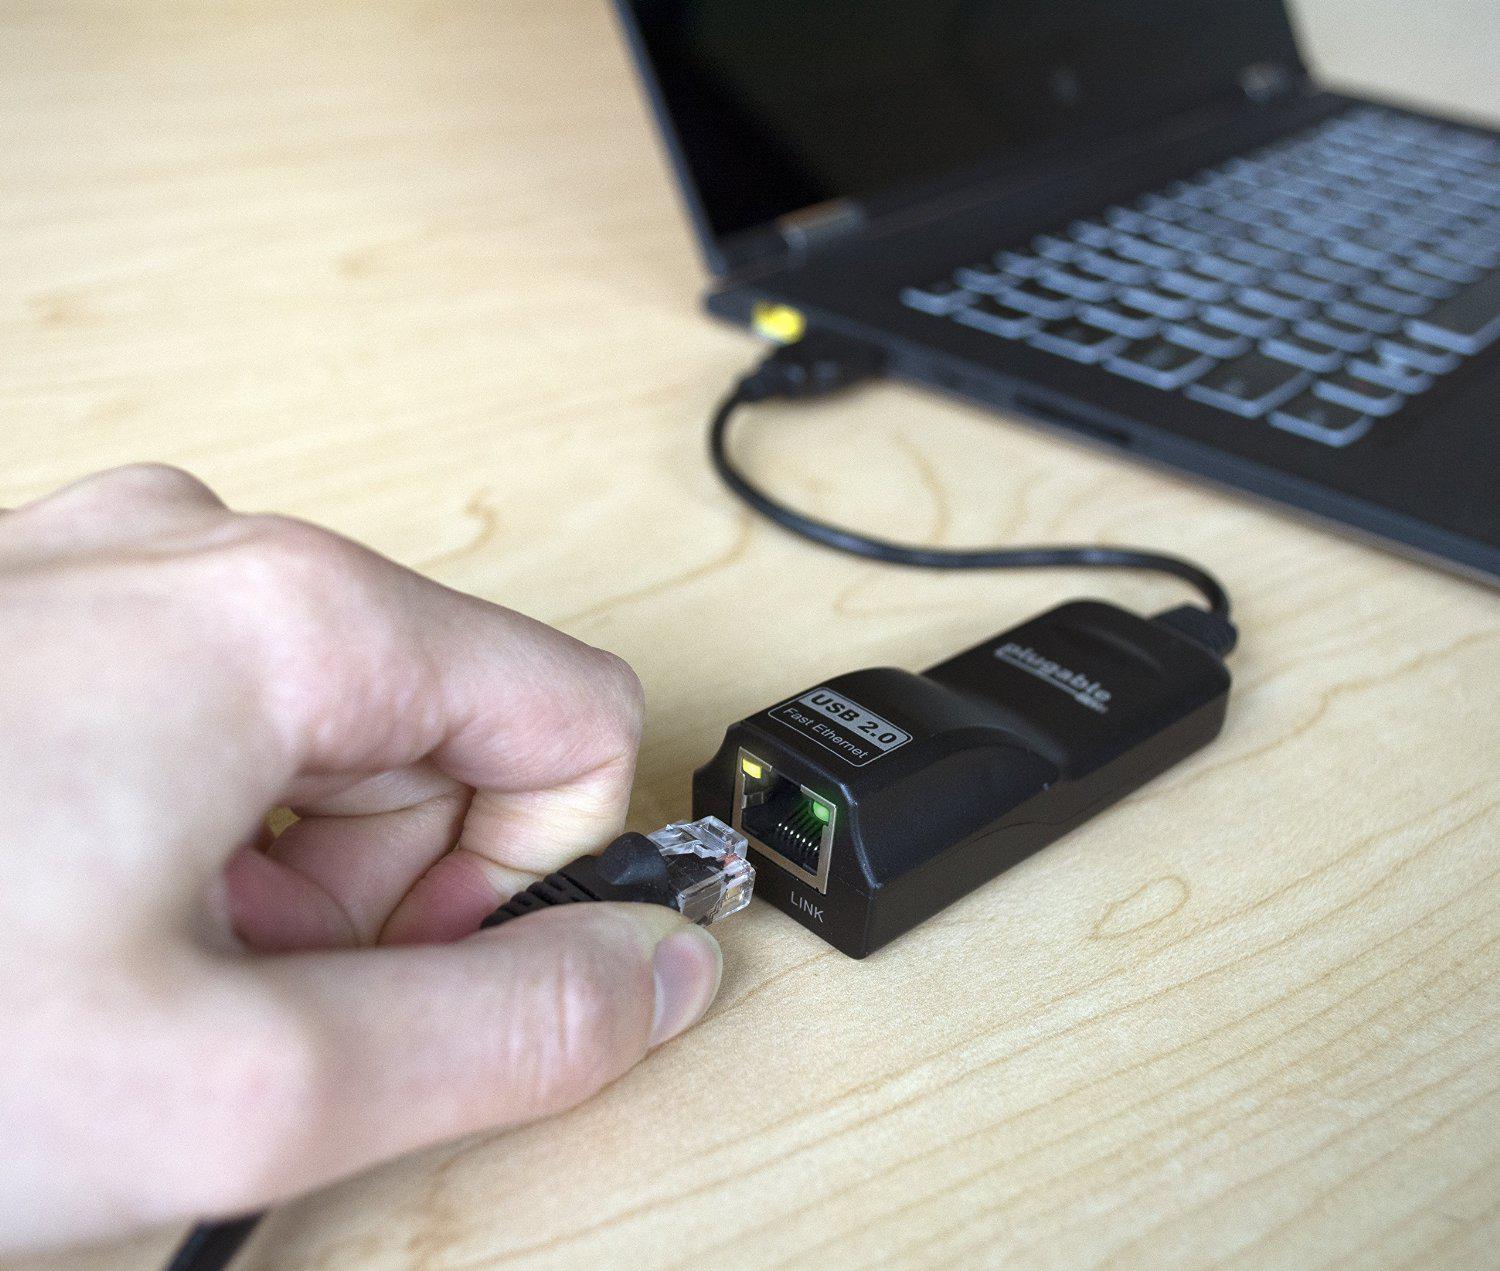 Using the Plugable USB-E100 Ethernet Adapter